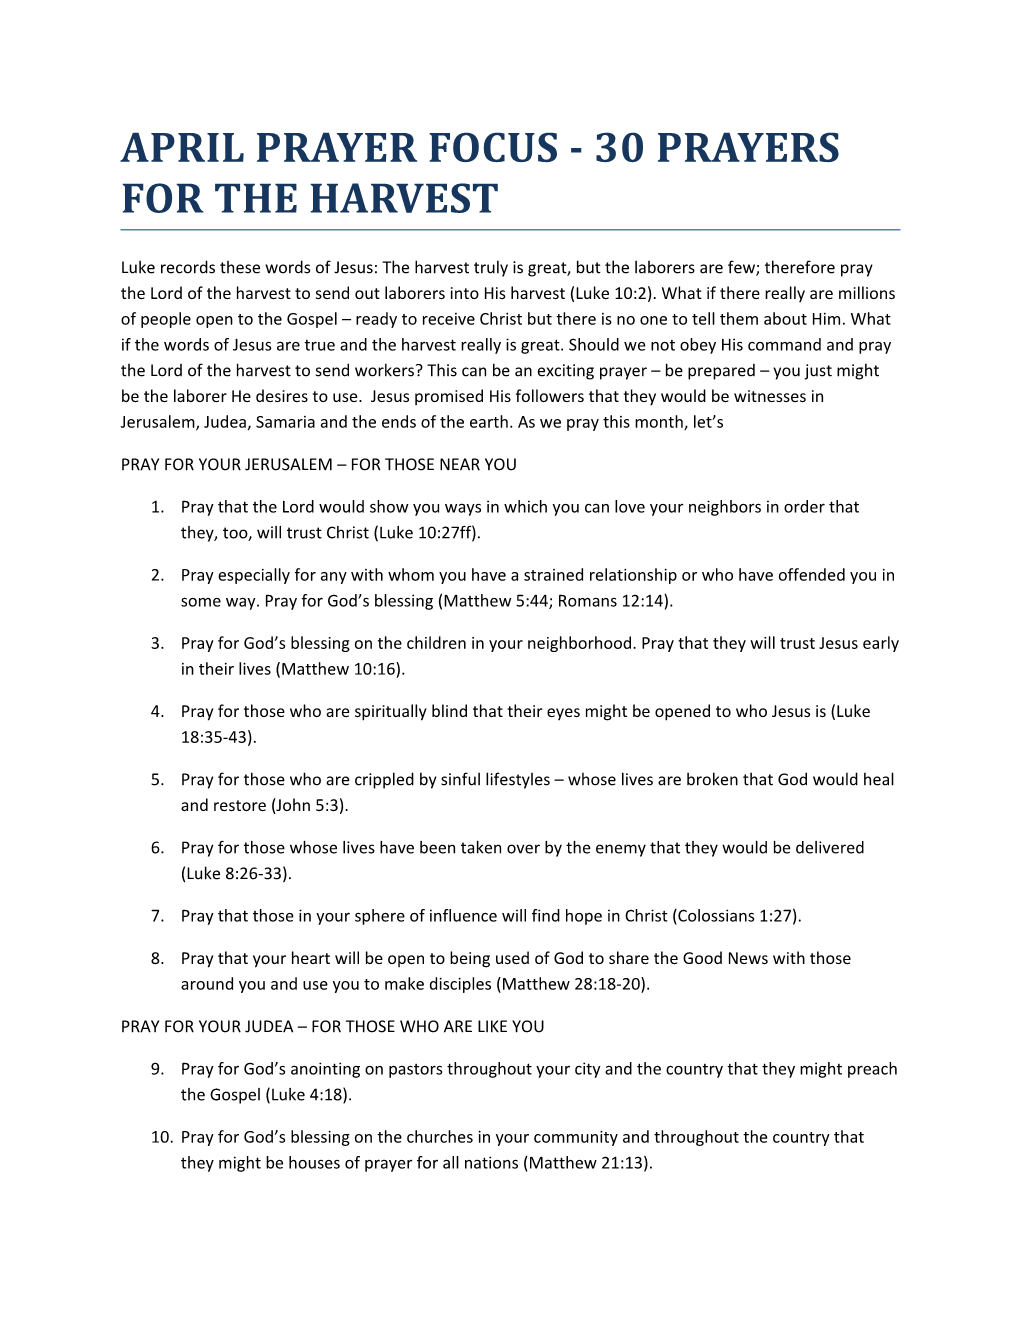 April Prayer Focus - 30 Prayers for the Harvest